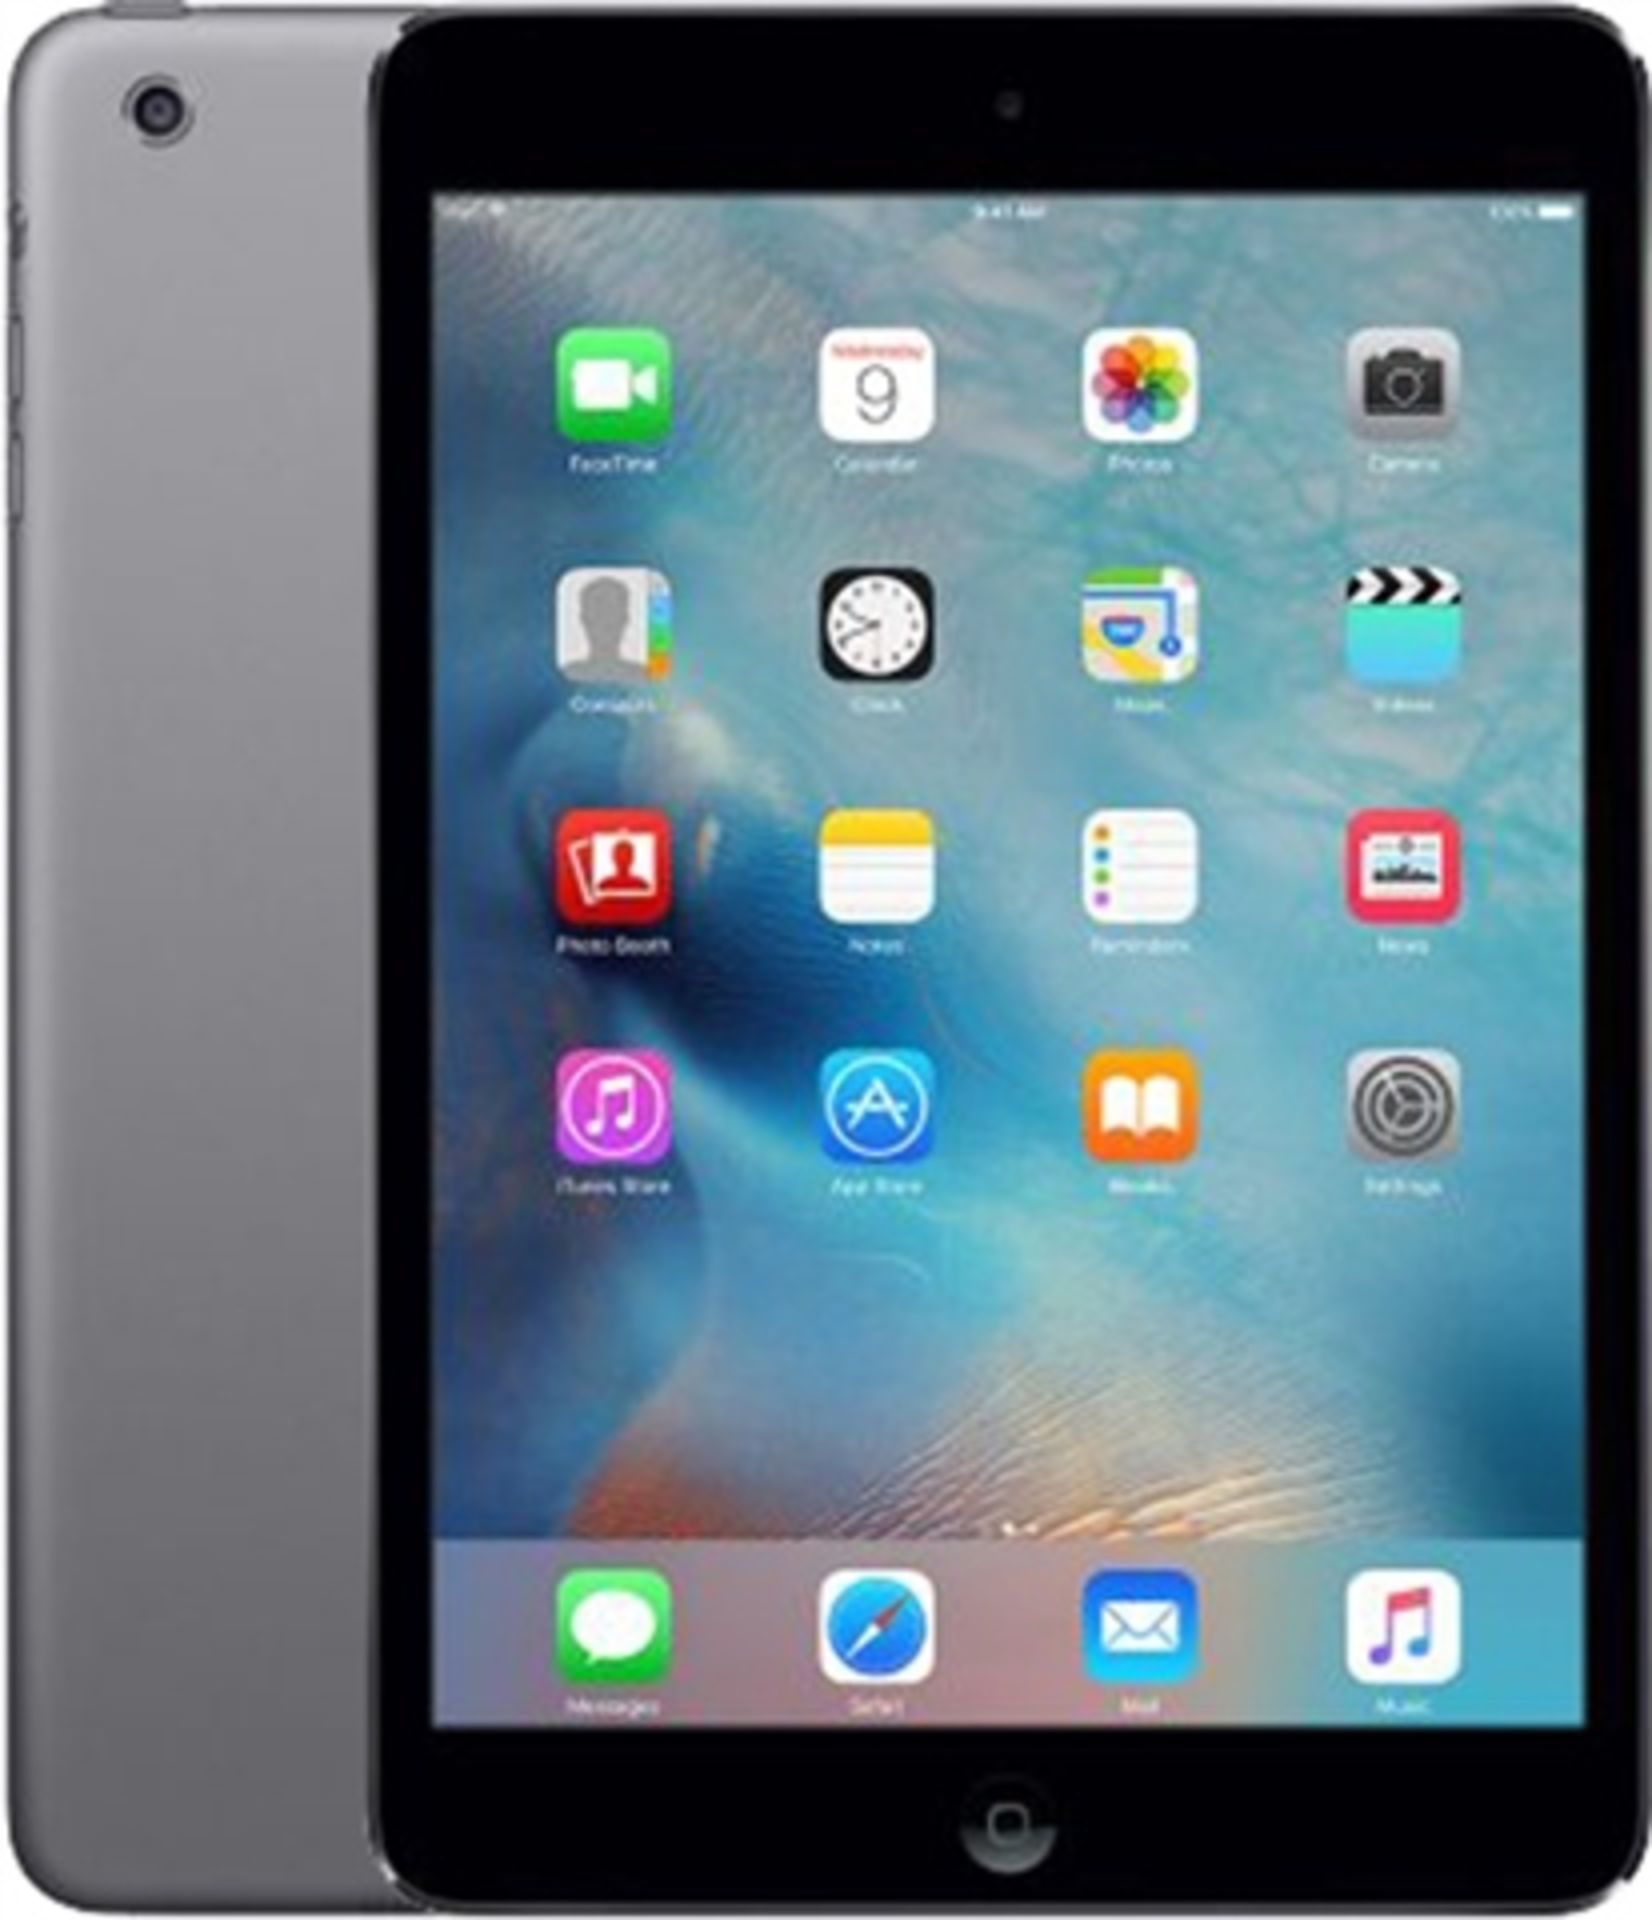 V Grade B Apple iPad Mini 2 16GB Space Grey - with Original box and accessories X 2 YOUR BID PRICE